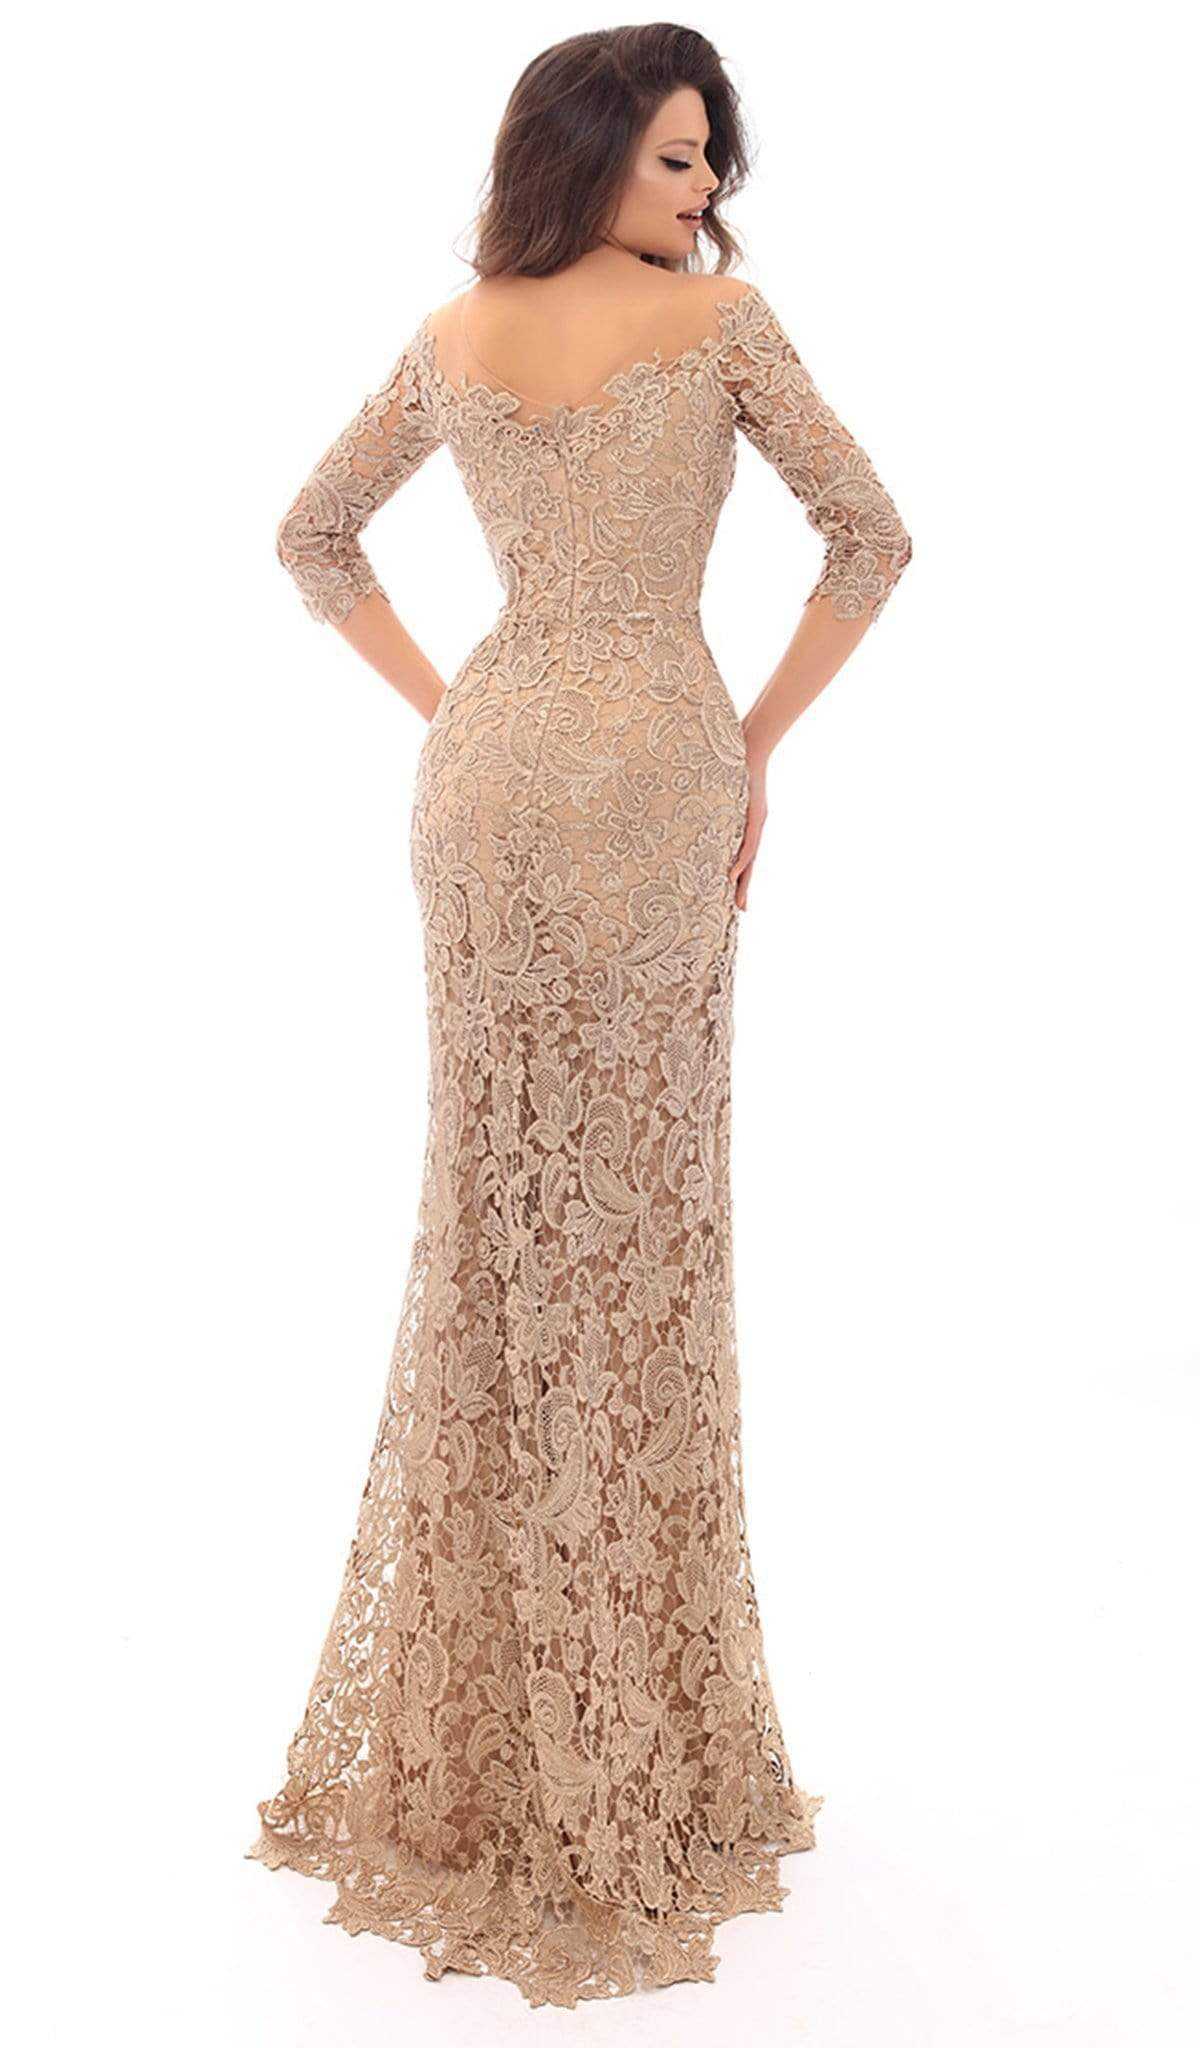 Tarik Ediz, Tarik Ediz - Floral Lace Illusion Neck Sheath Dress With Train 93675 - 1 pc Gold In Size 10 Available